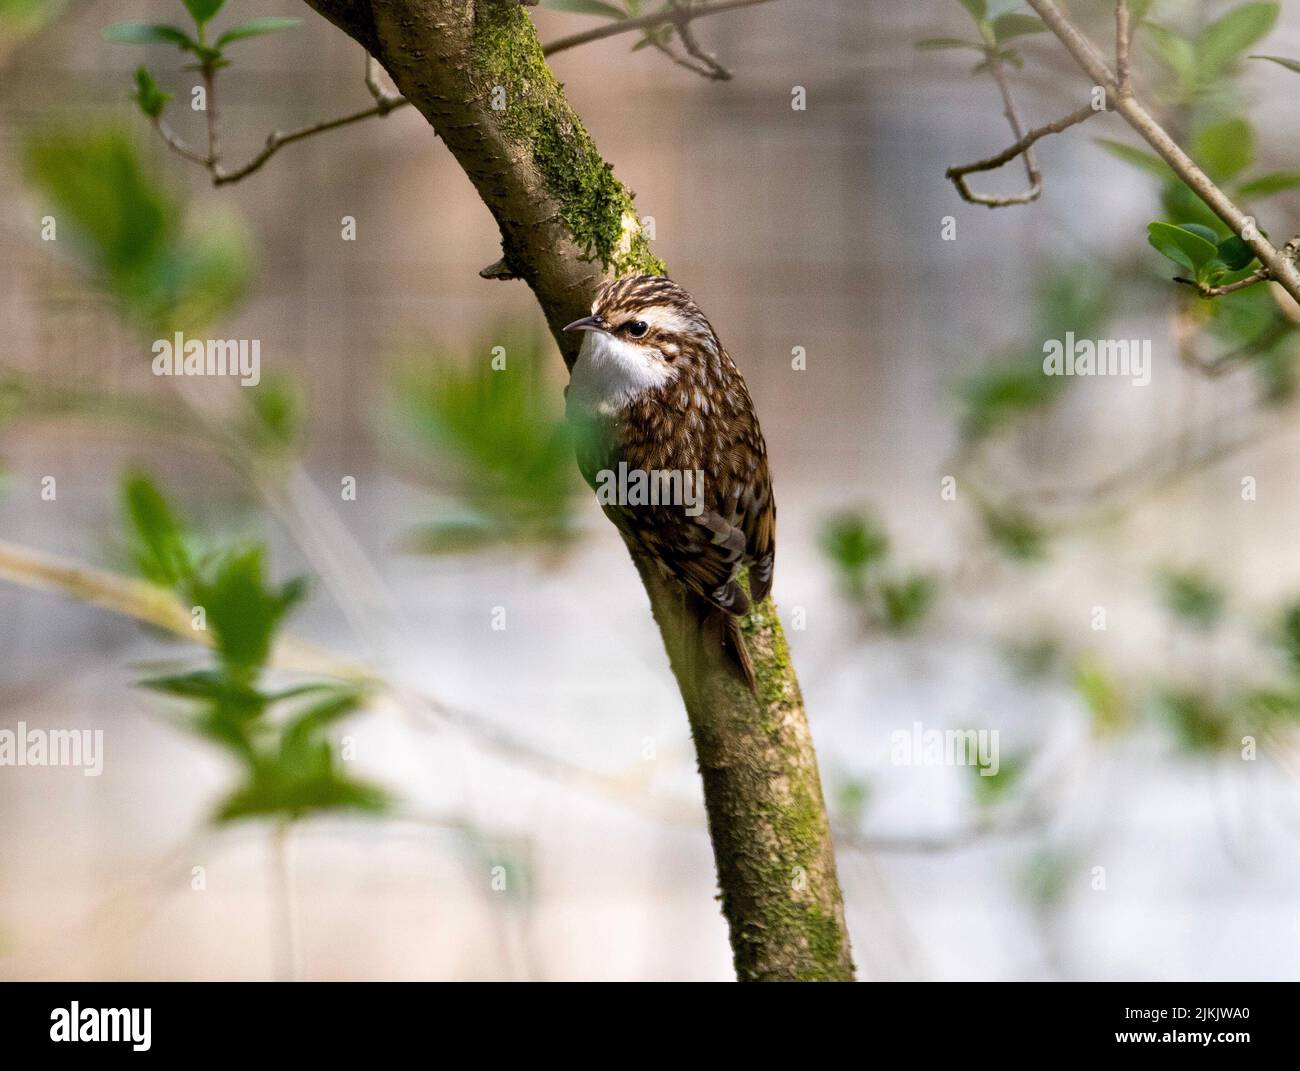 A closeup of a treecreeper bird perching on tree trunk in the garden Stock Photo